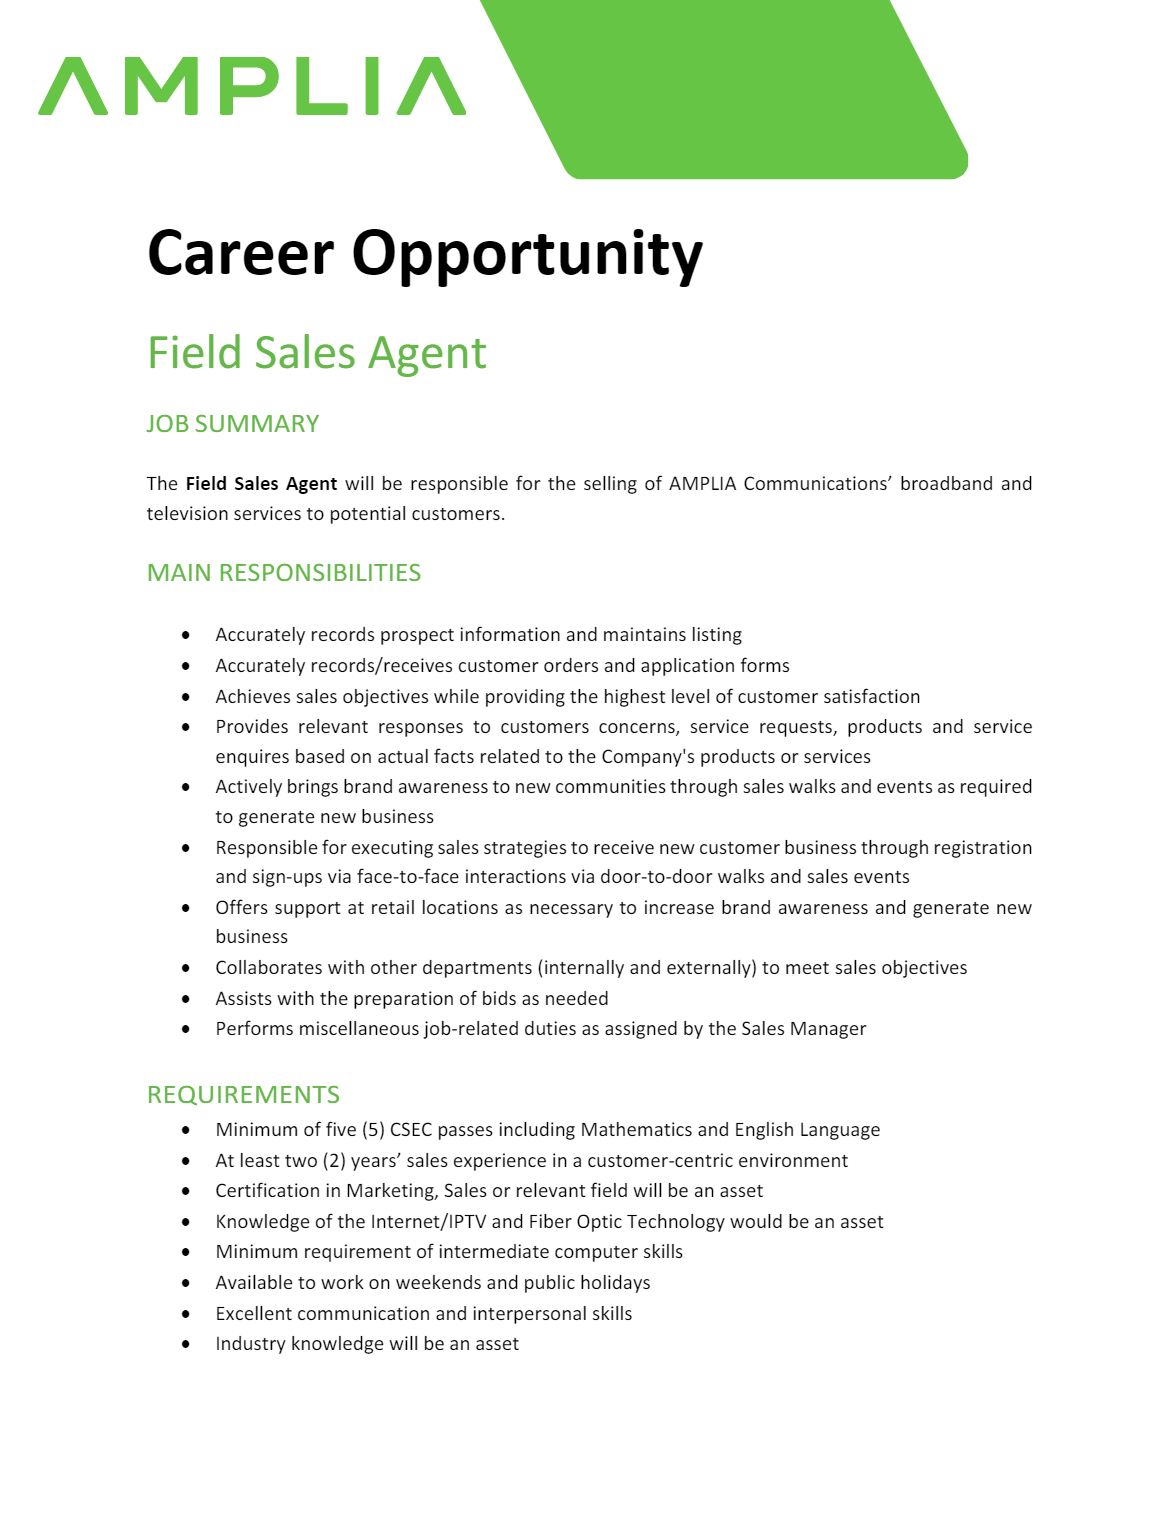 Amplia Career Opportunities April 2021